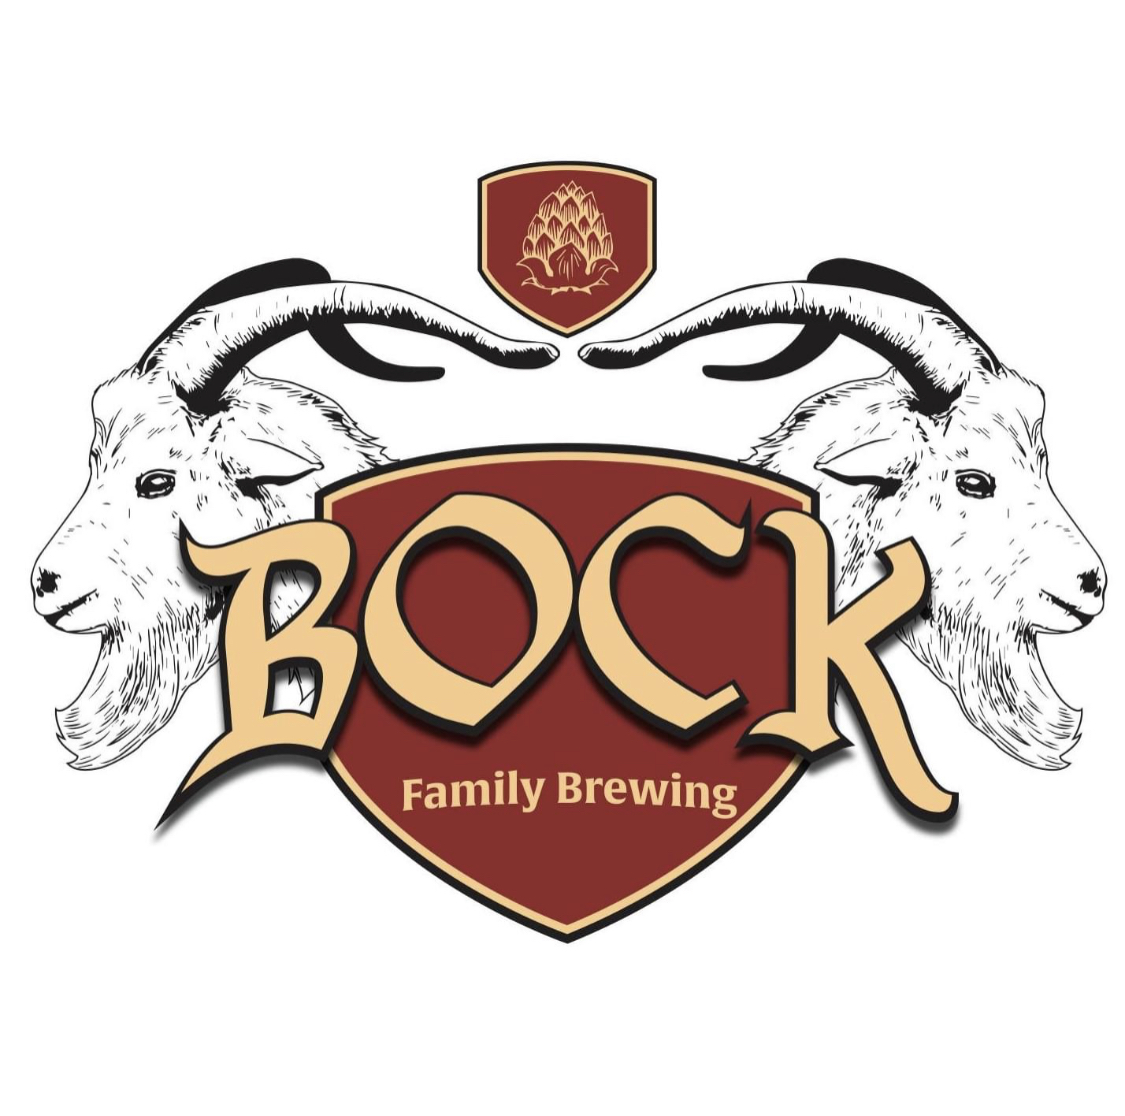 Bock Family Brewing